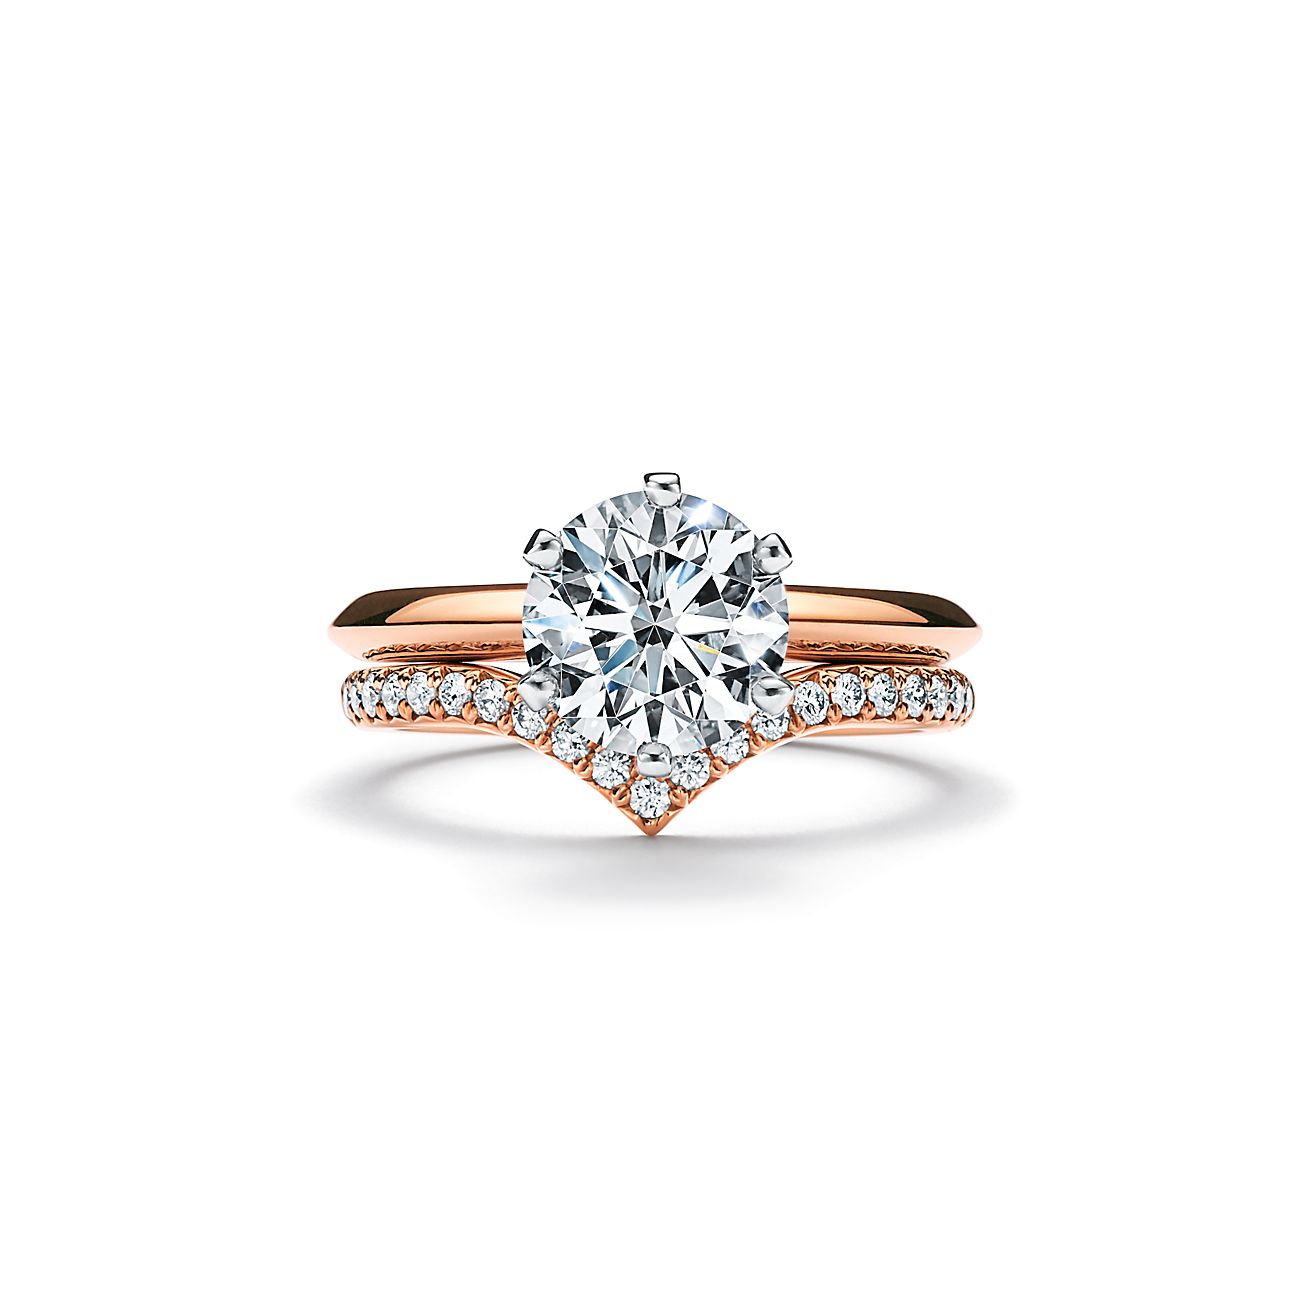 2 carat tiffany setting engagement ring